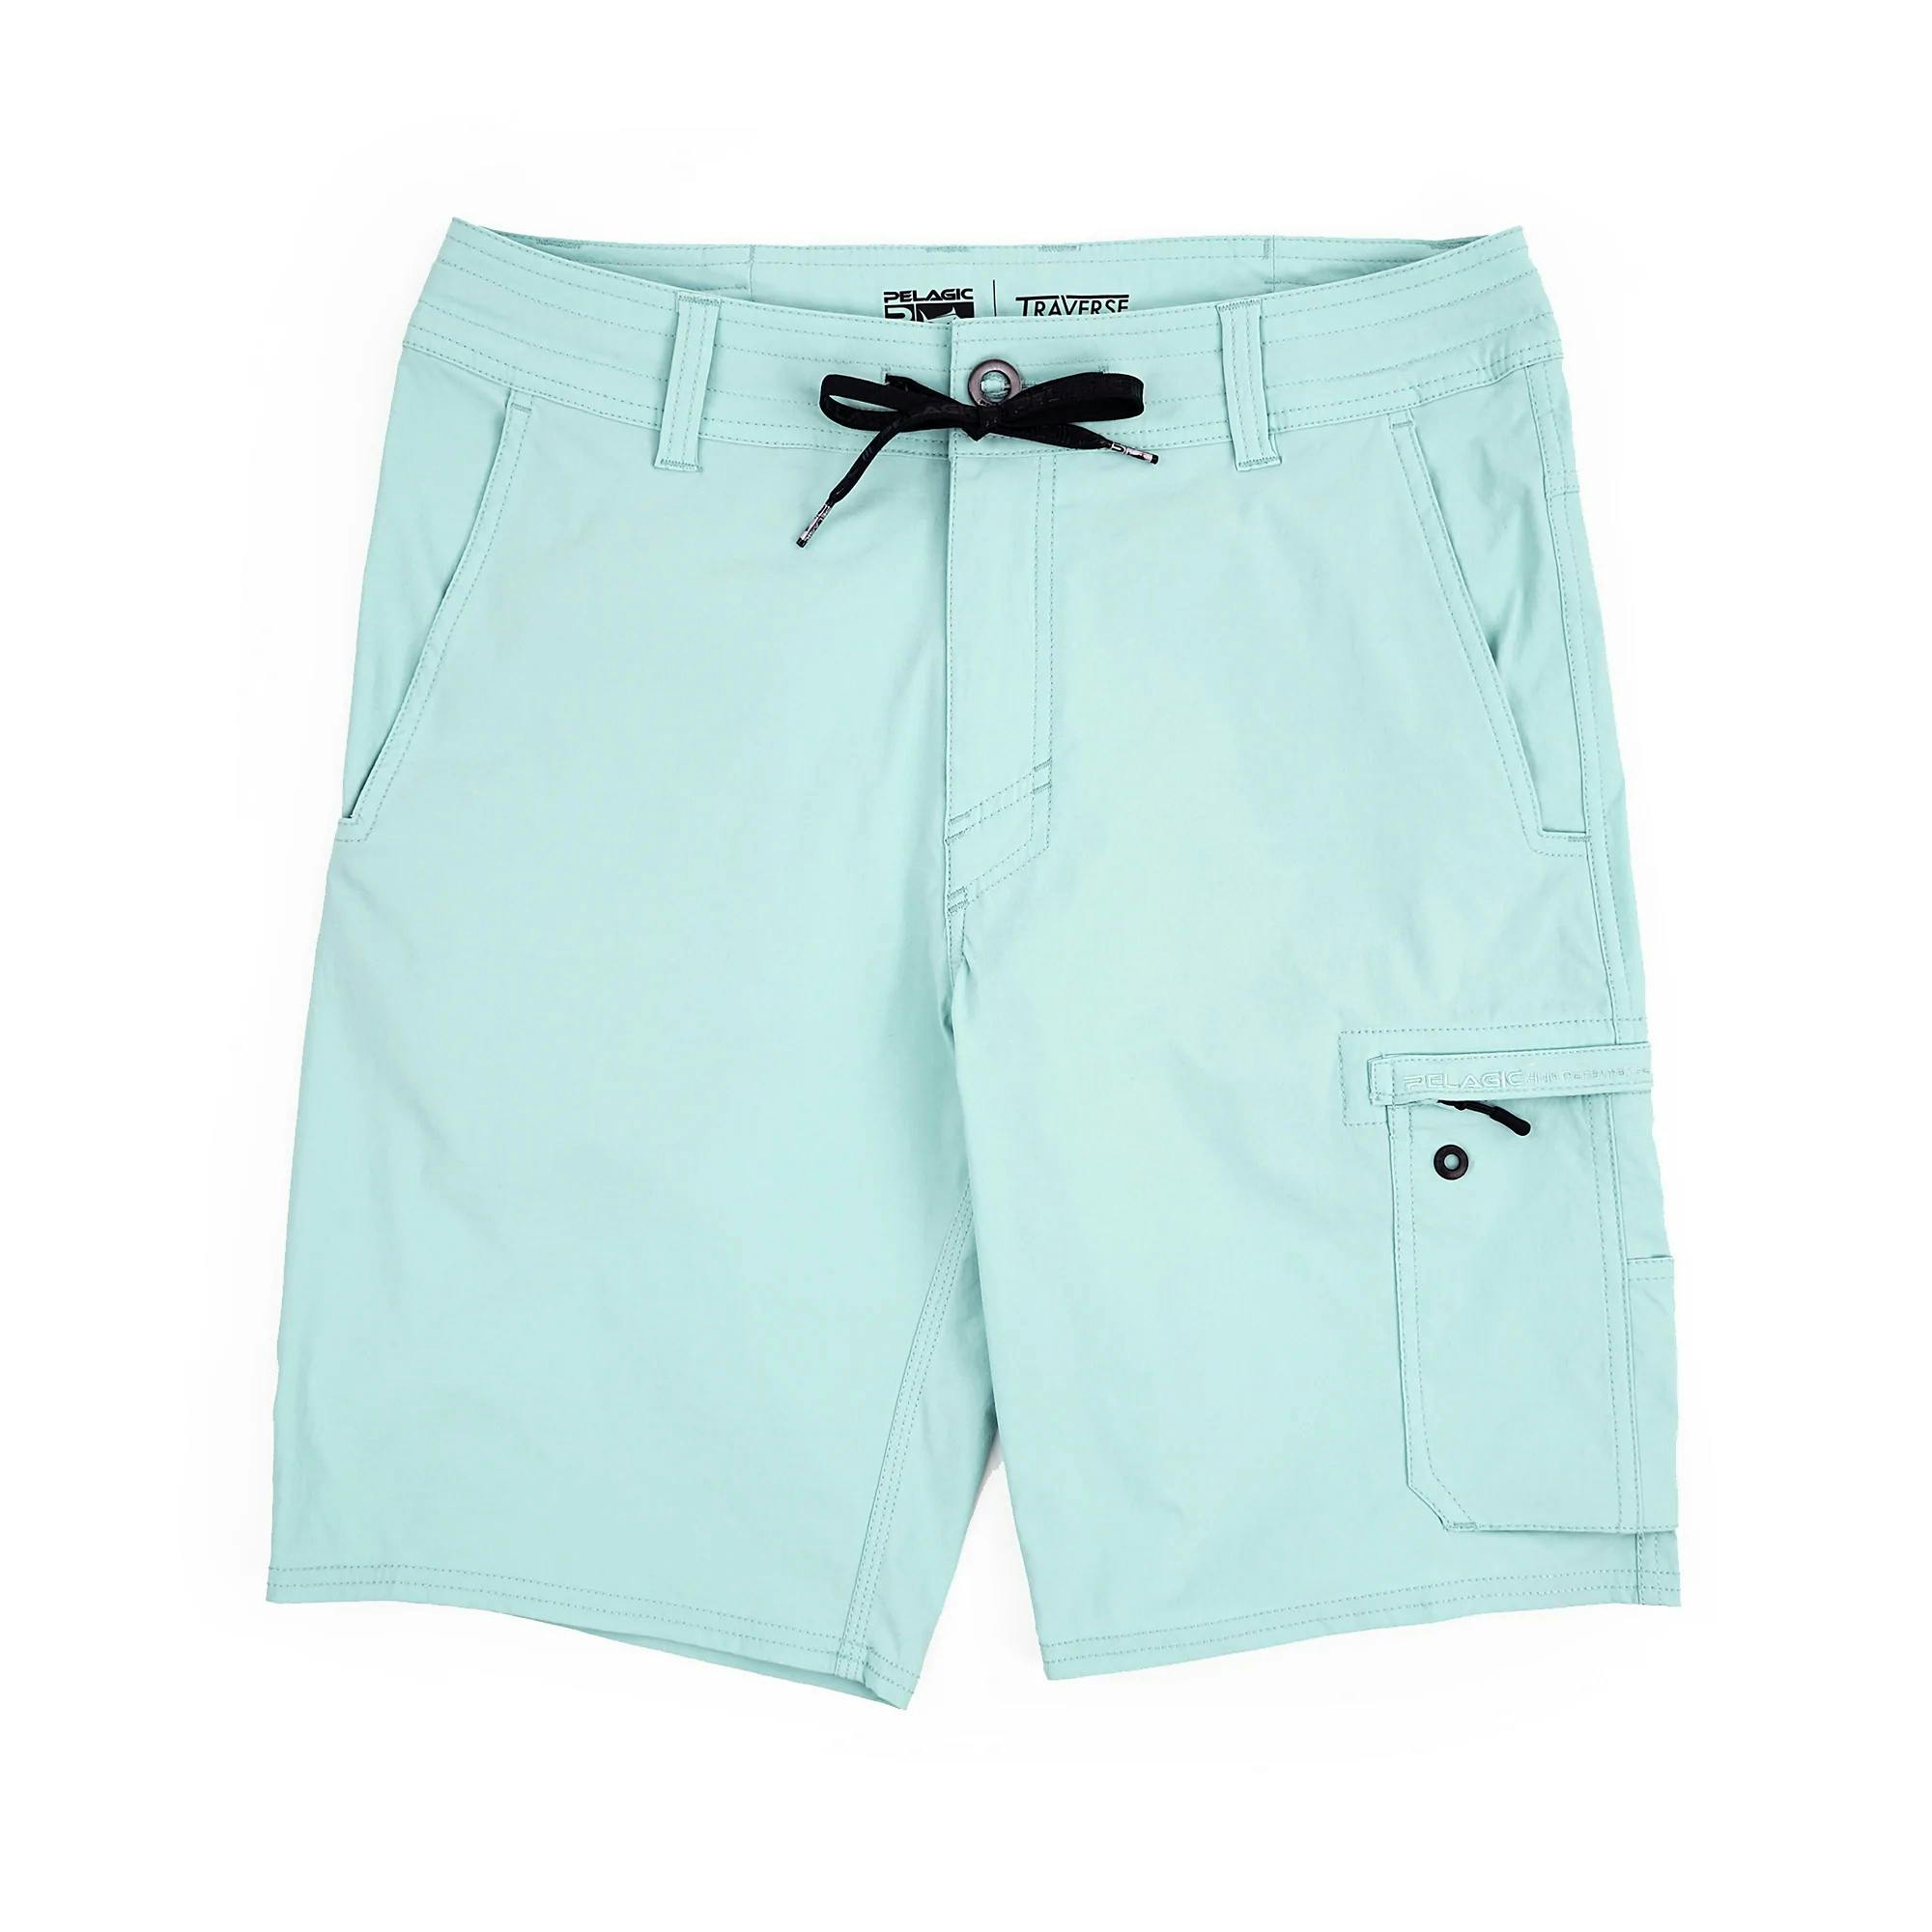 Pelagic Traverse Hybrid Shorts (Men's) - Turquoise